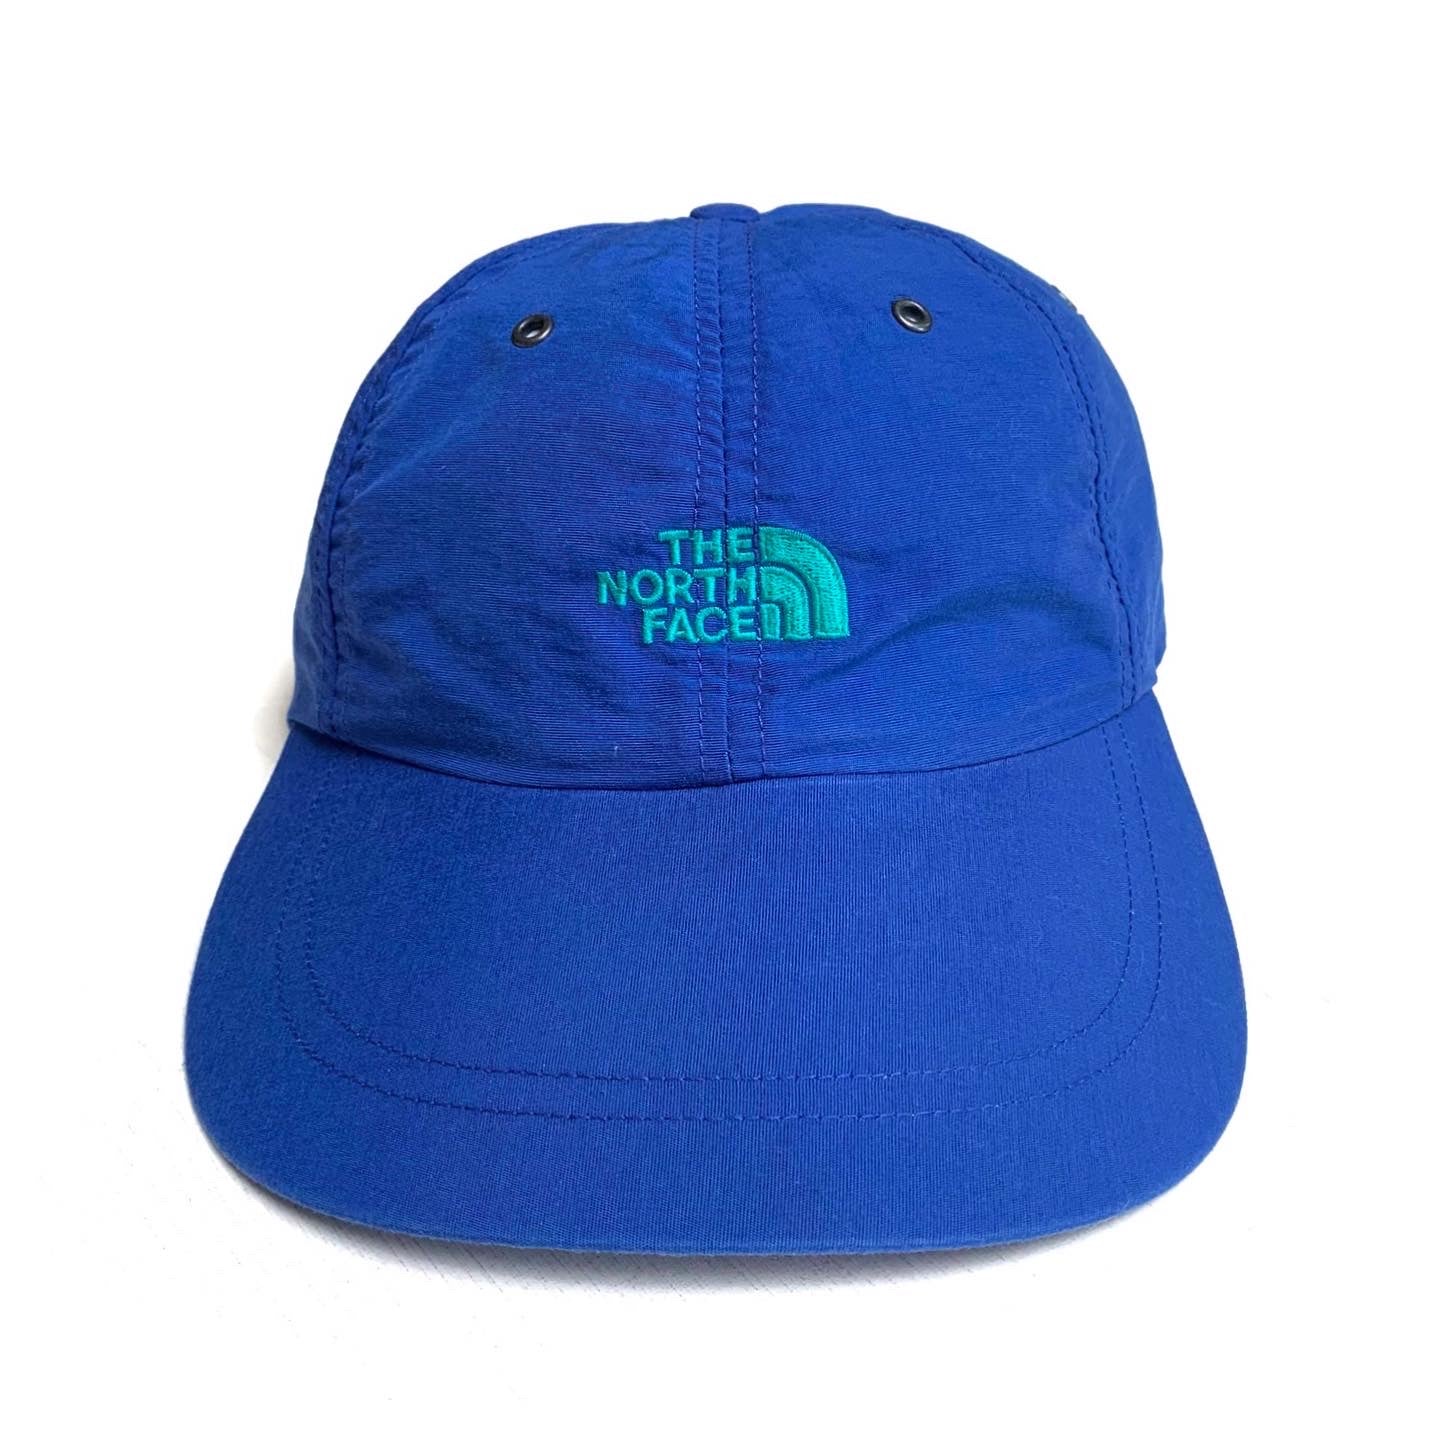 1997 The North Face Nylon Cap, Bright Blue & Green (OS)